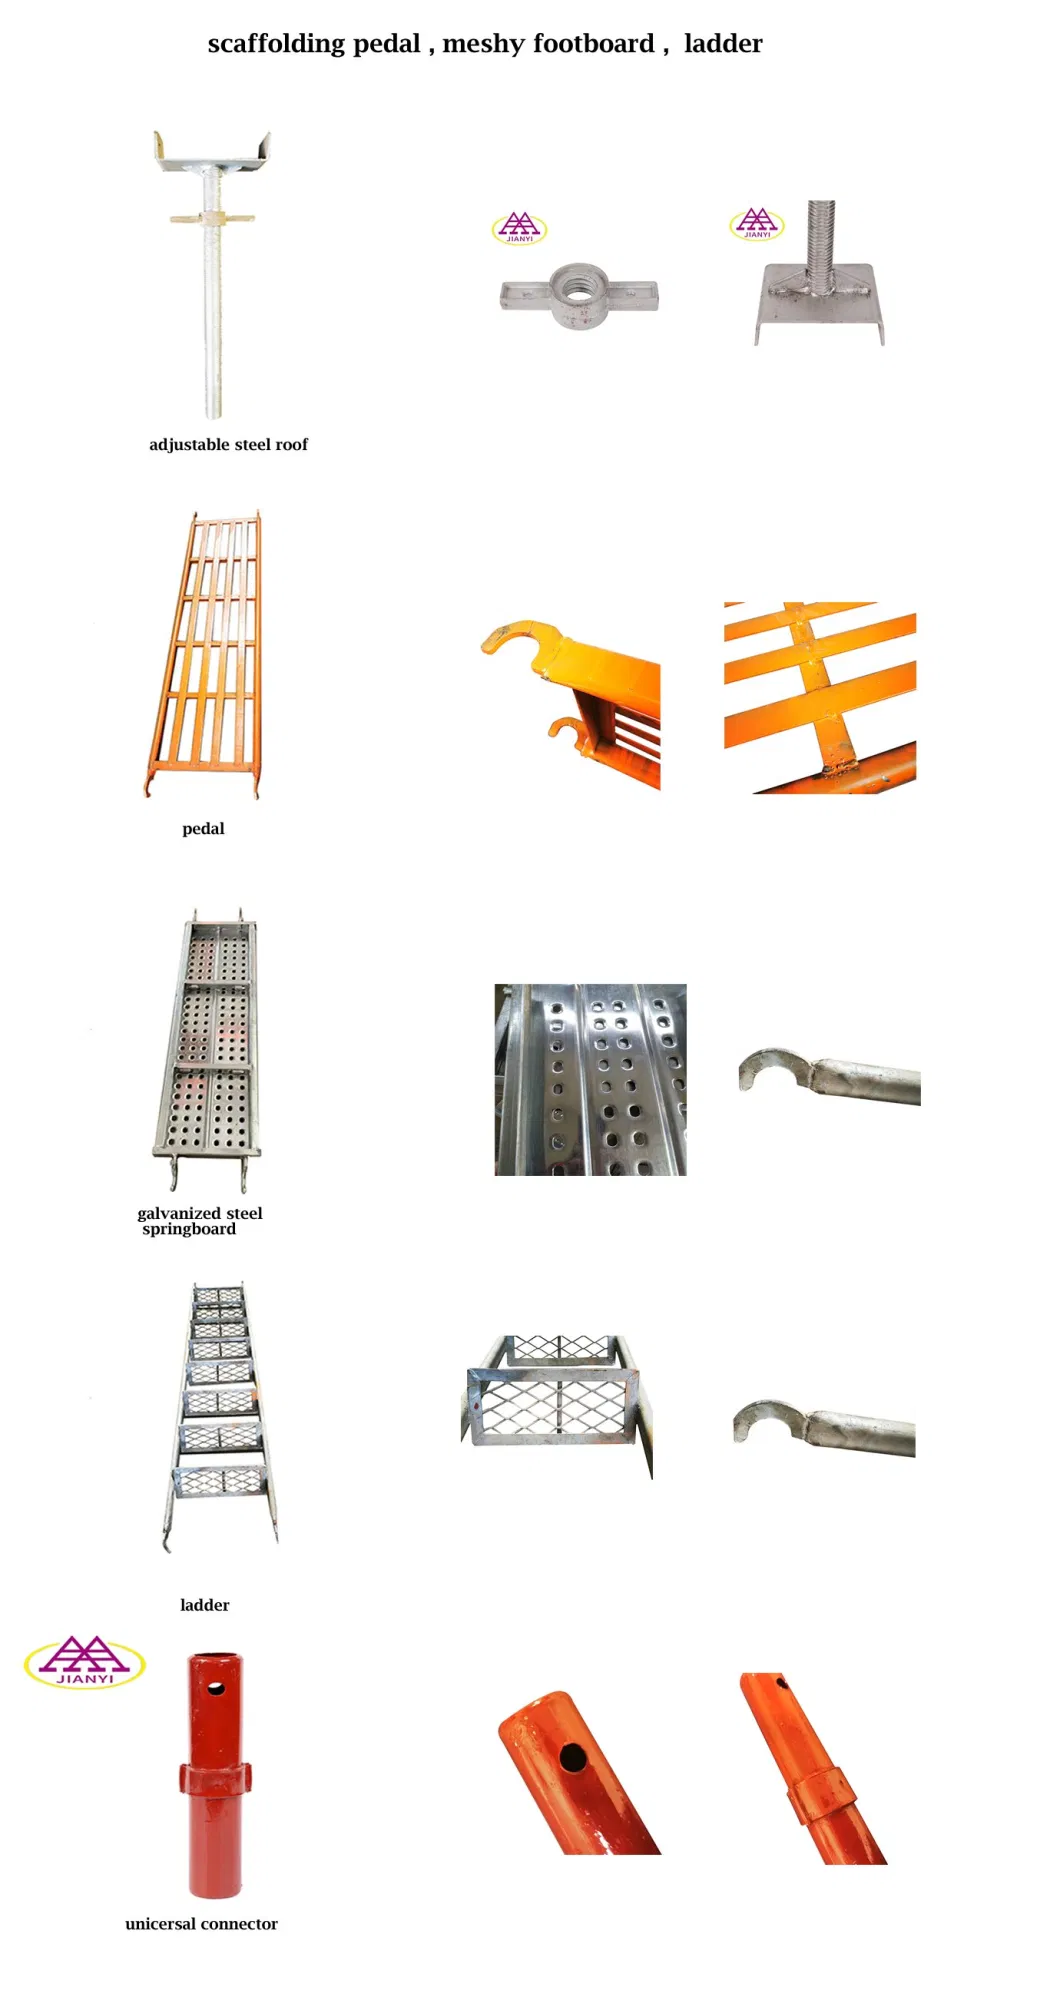 Low Price Painted Formwork Steel Ladder Frame Scaffolding Adjustable